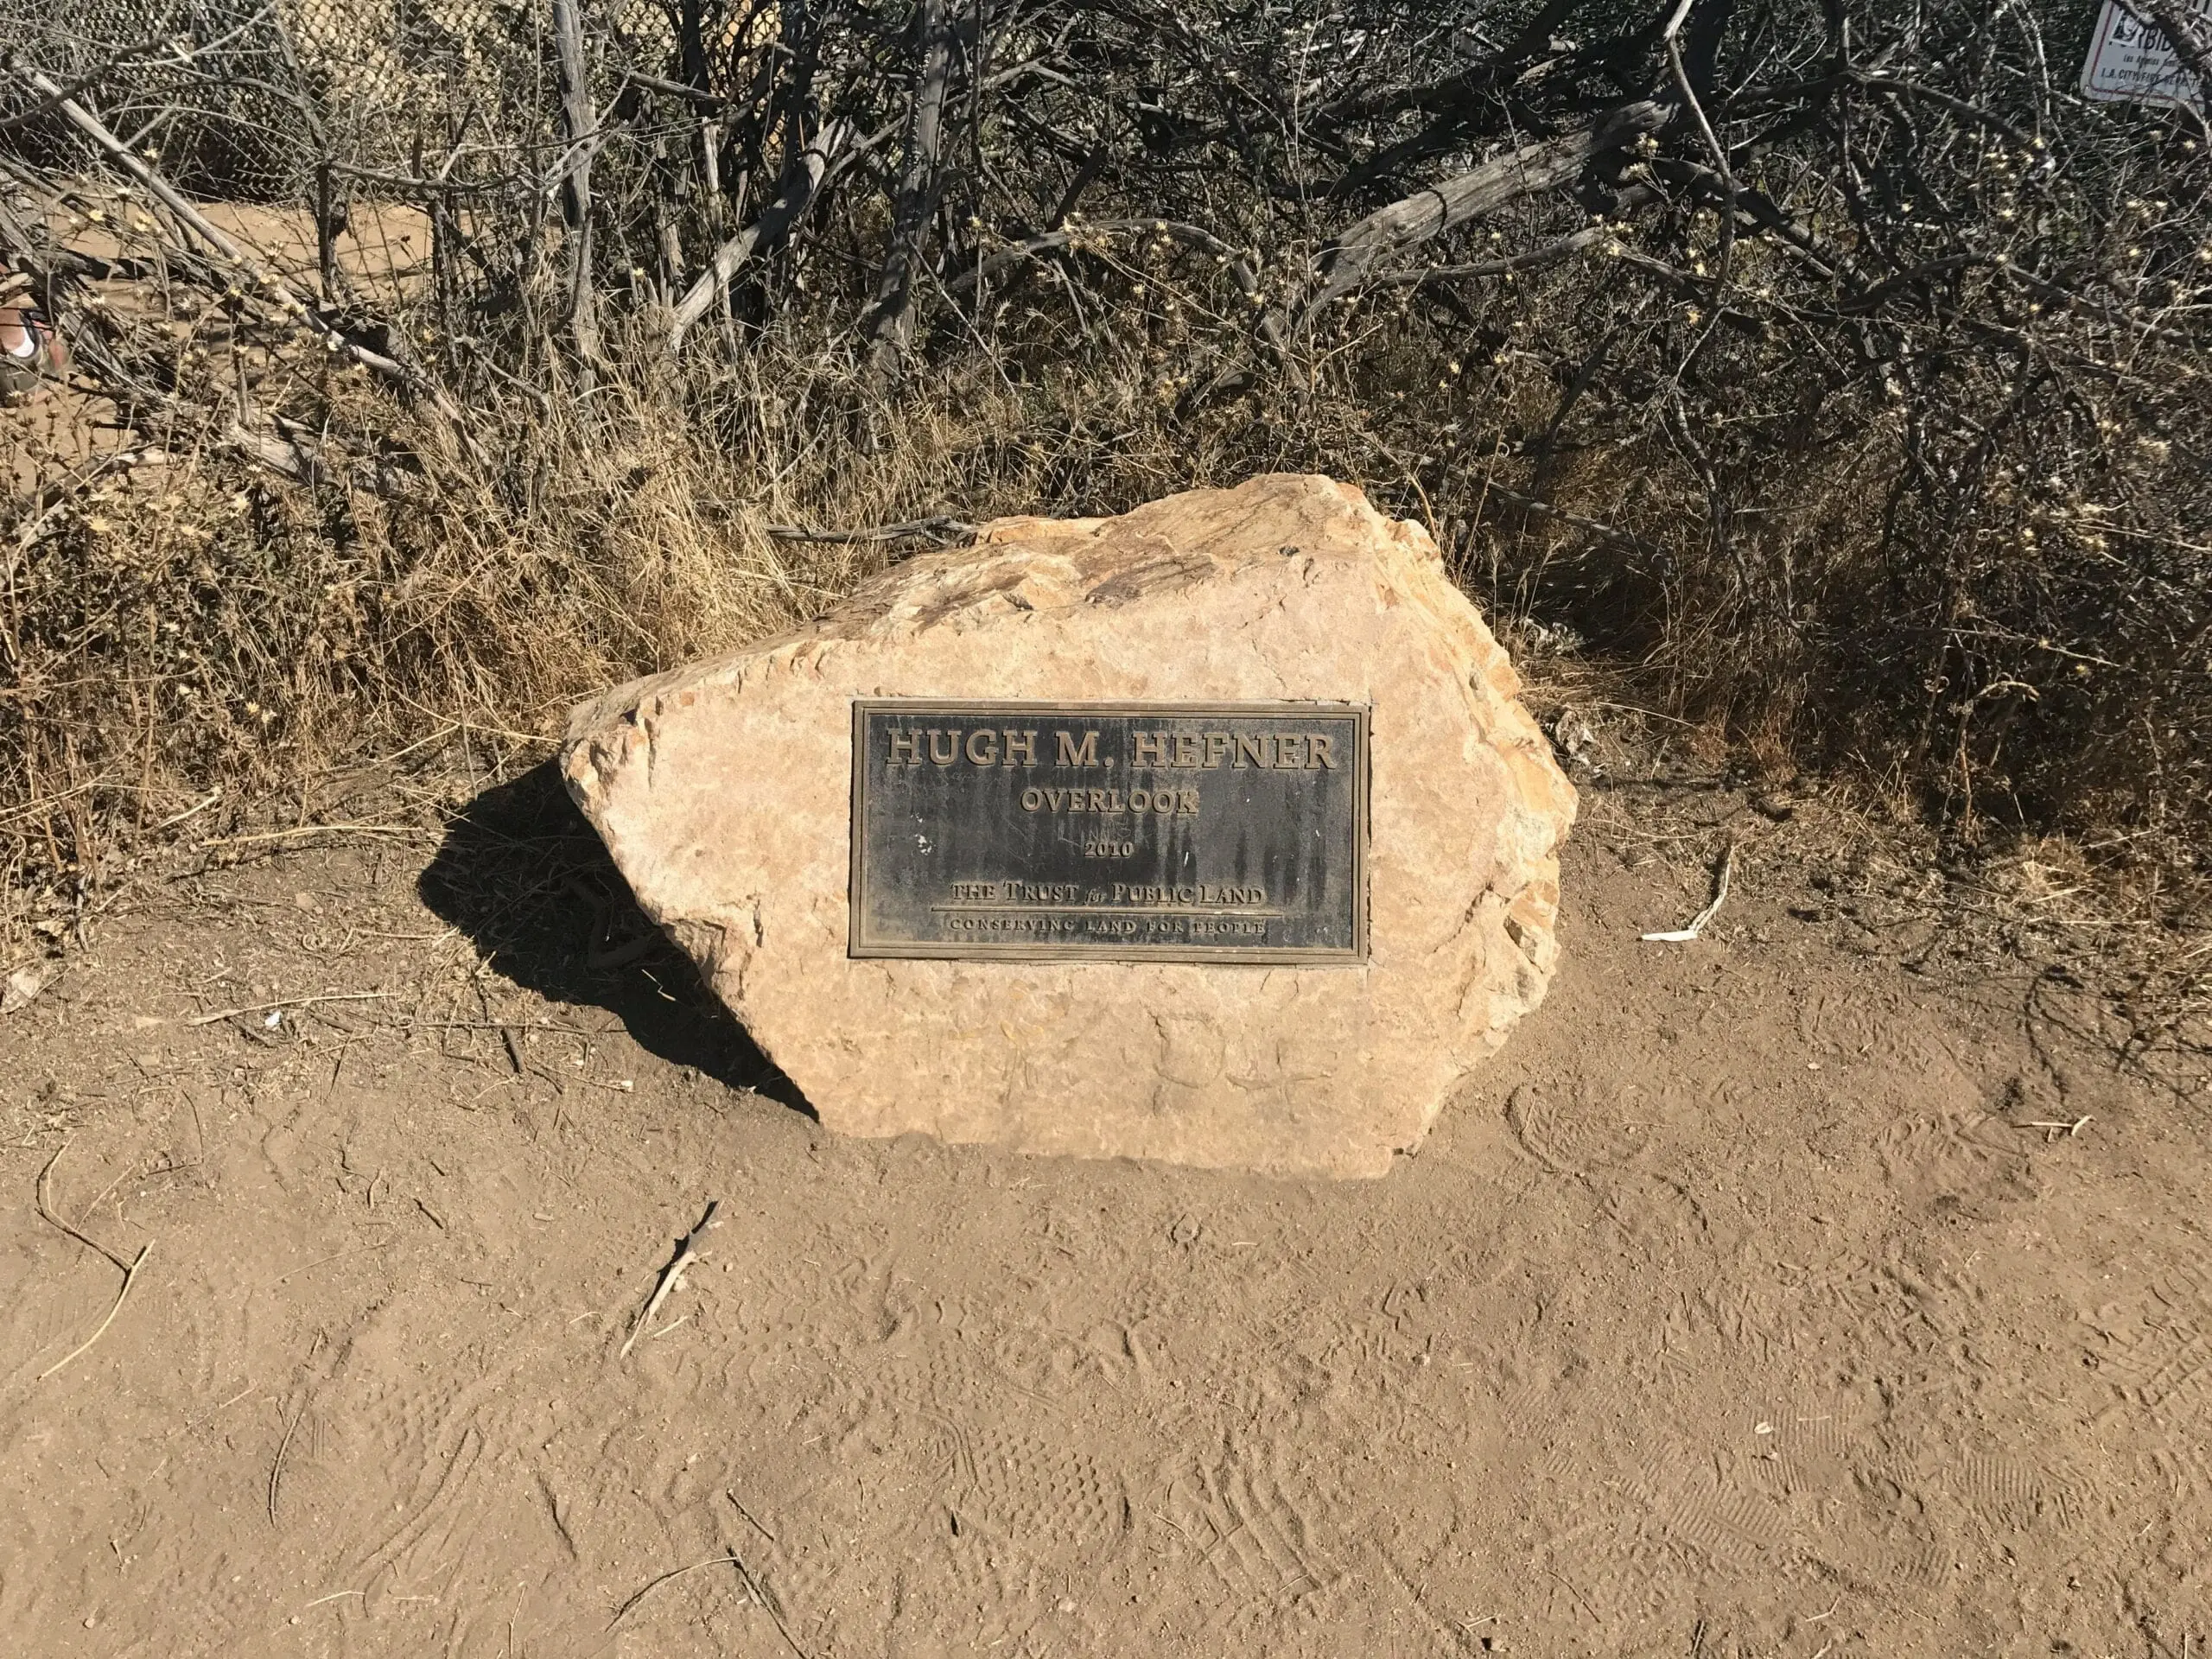 Hugh M. Hefner memorial stone